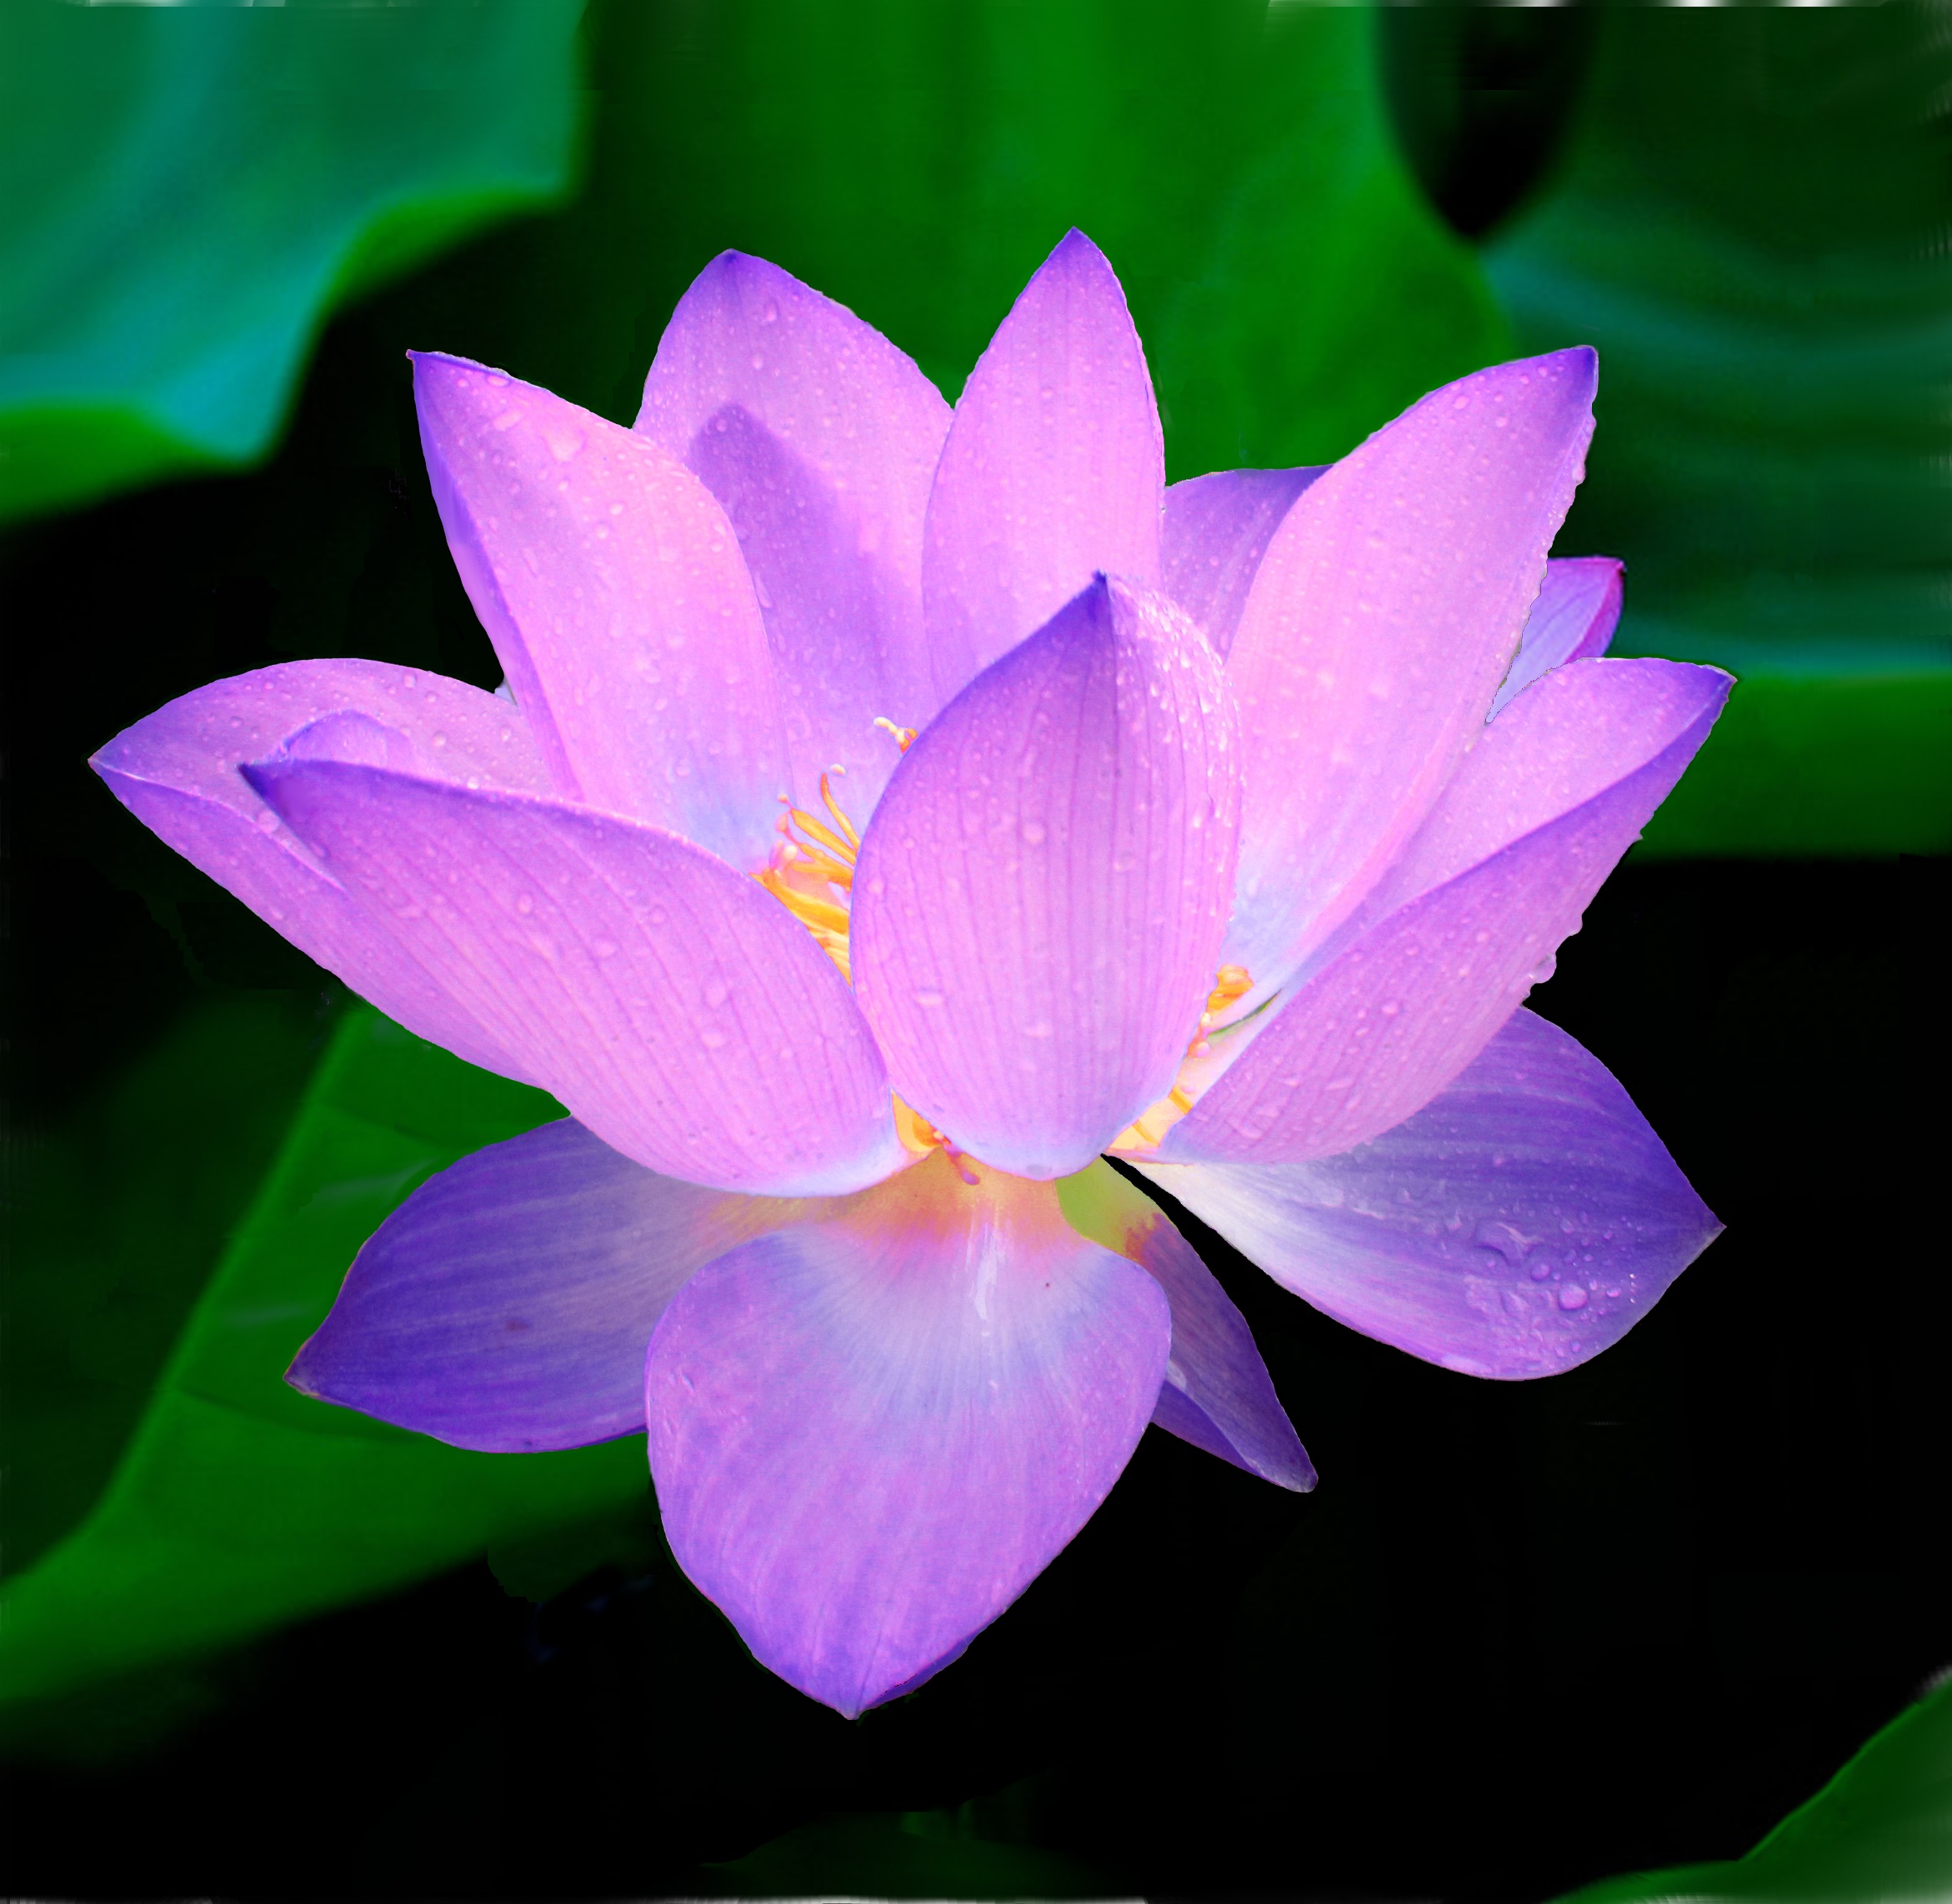 File:Lotus-215460.jpg - Wikimedia Commons